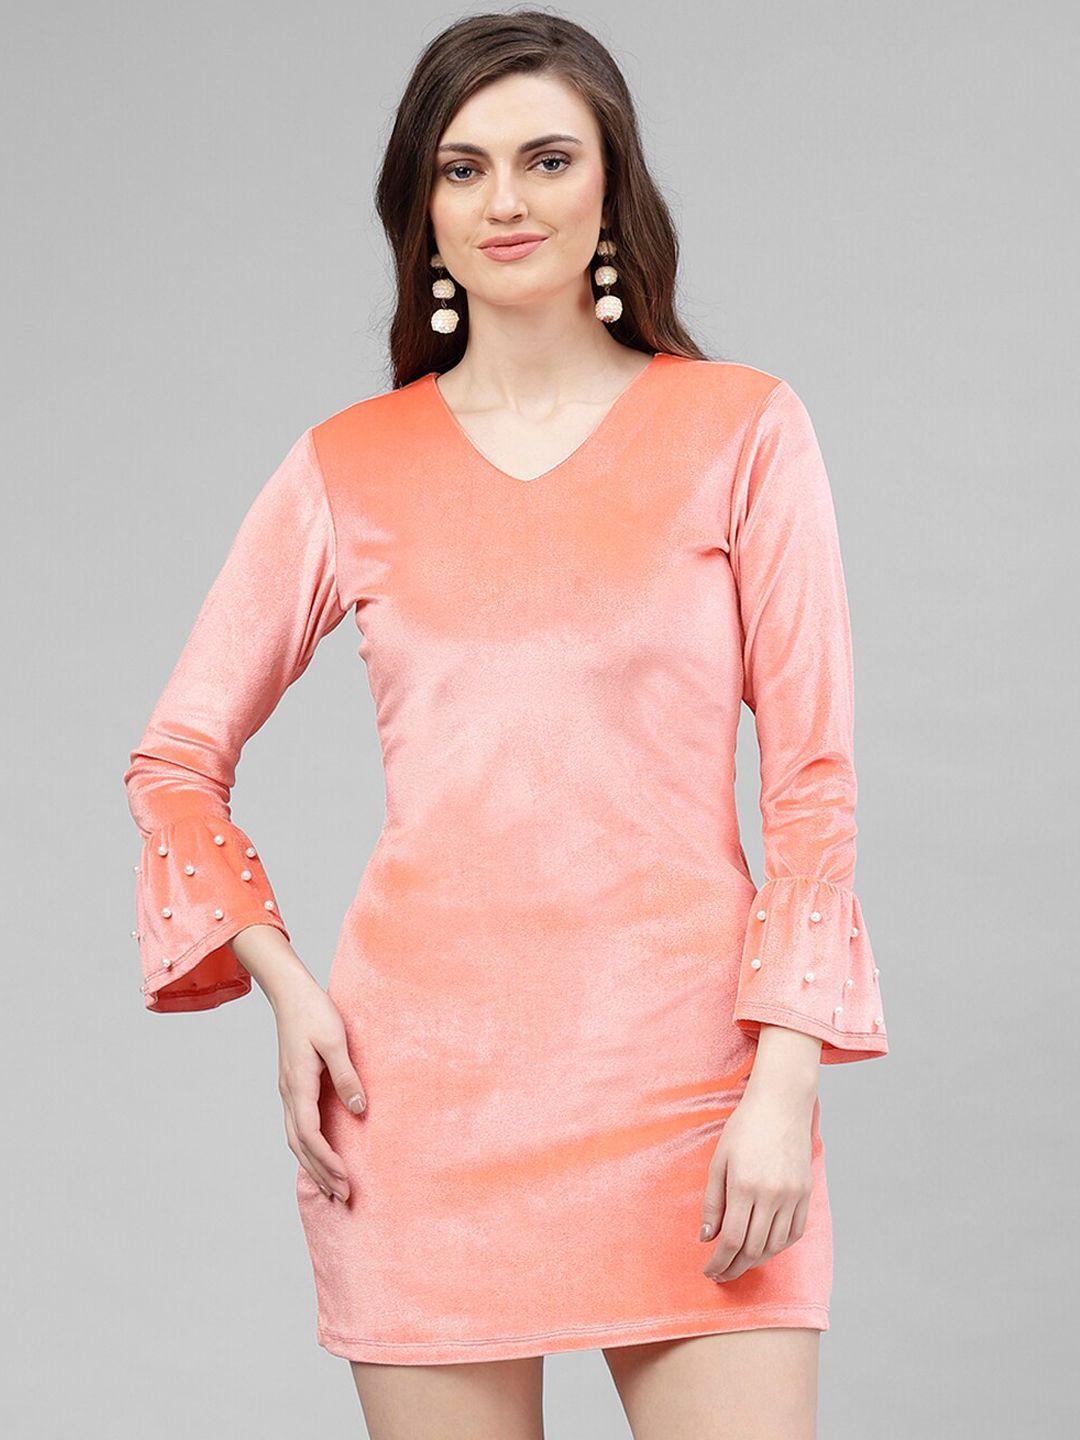 kassually women peach-coloured solid sheath dress